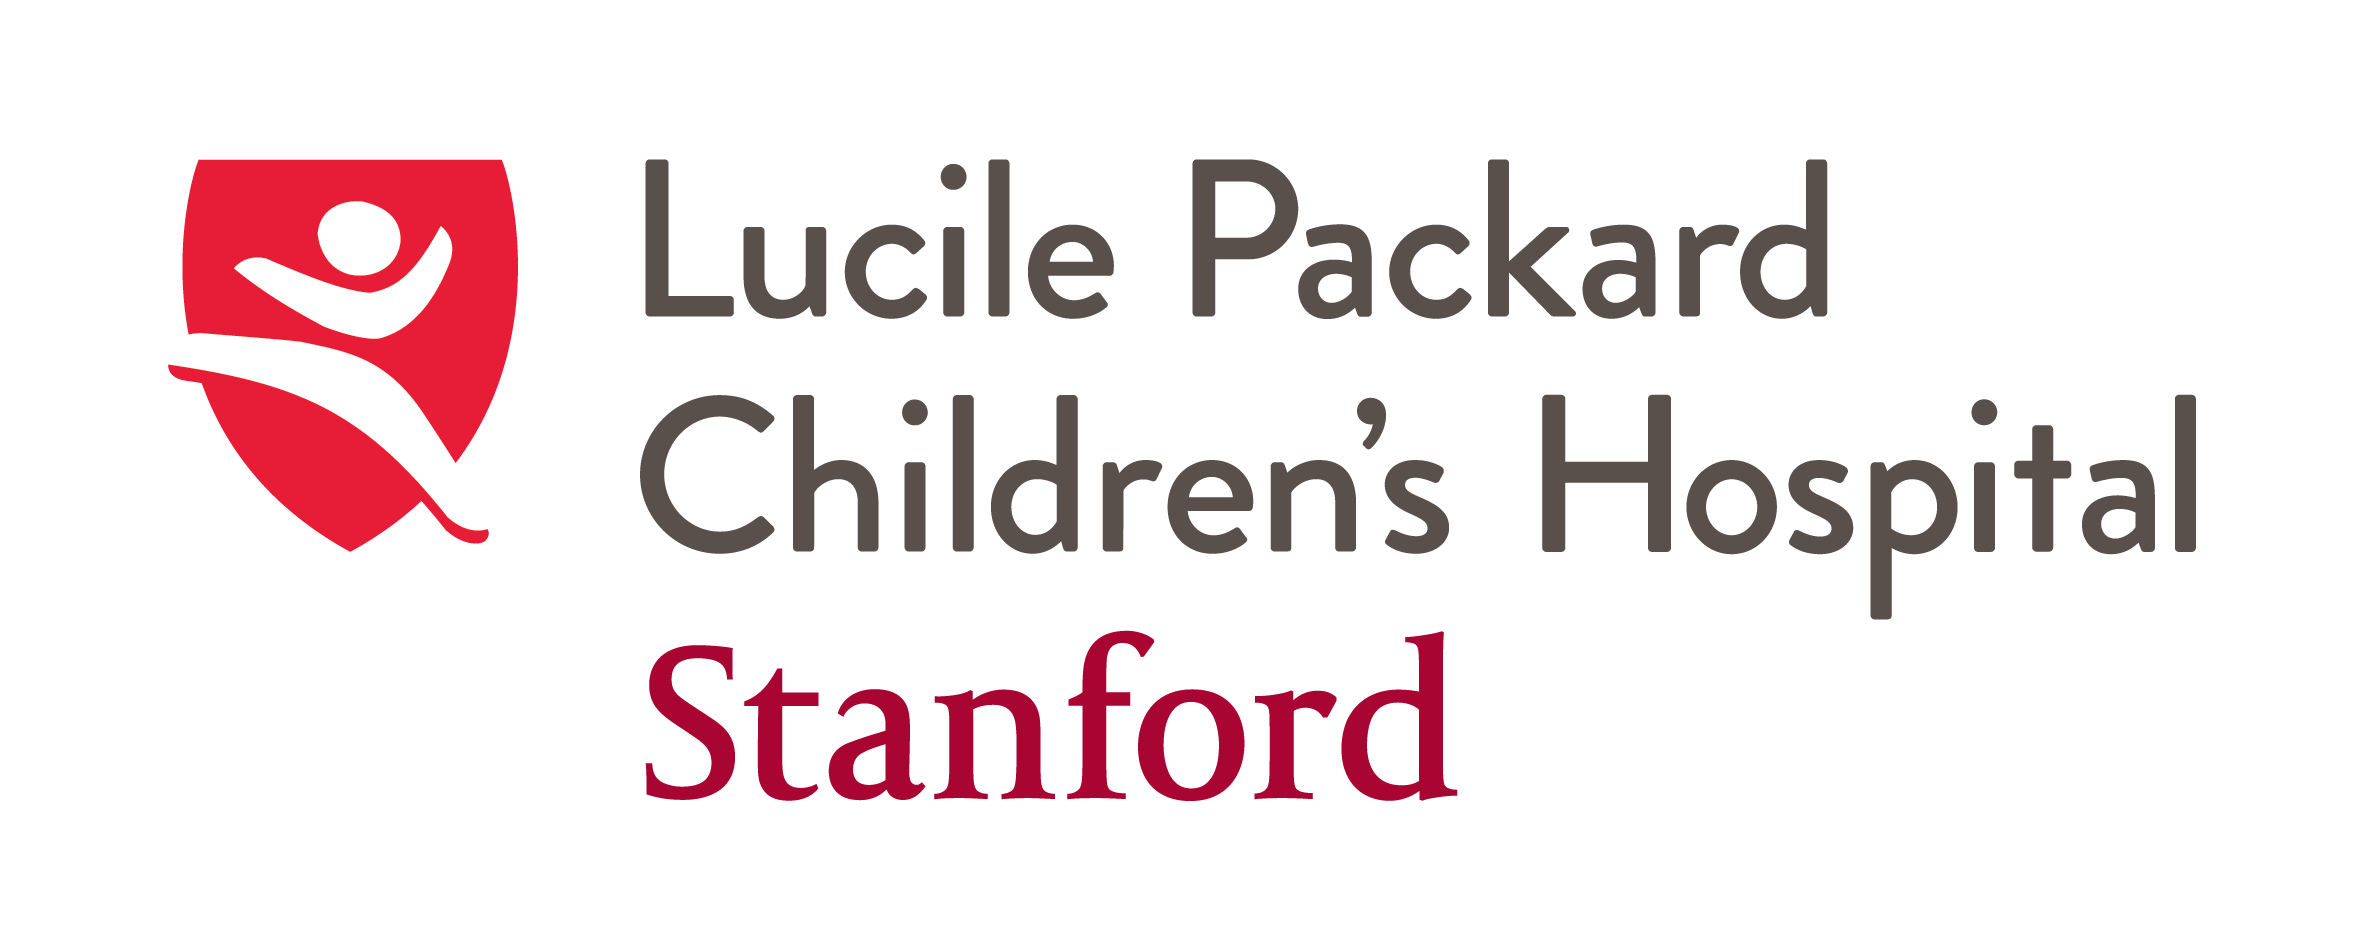 healthcare public relations, children's hospitals, Stanford